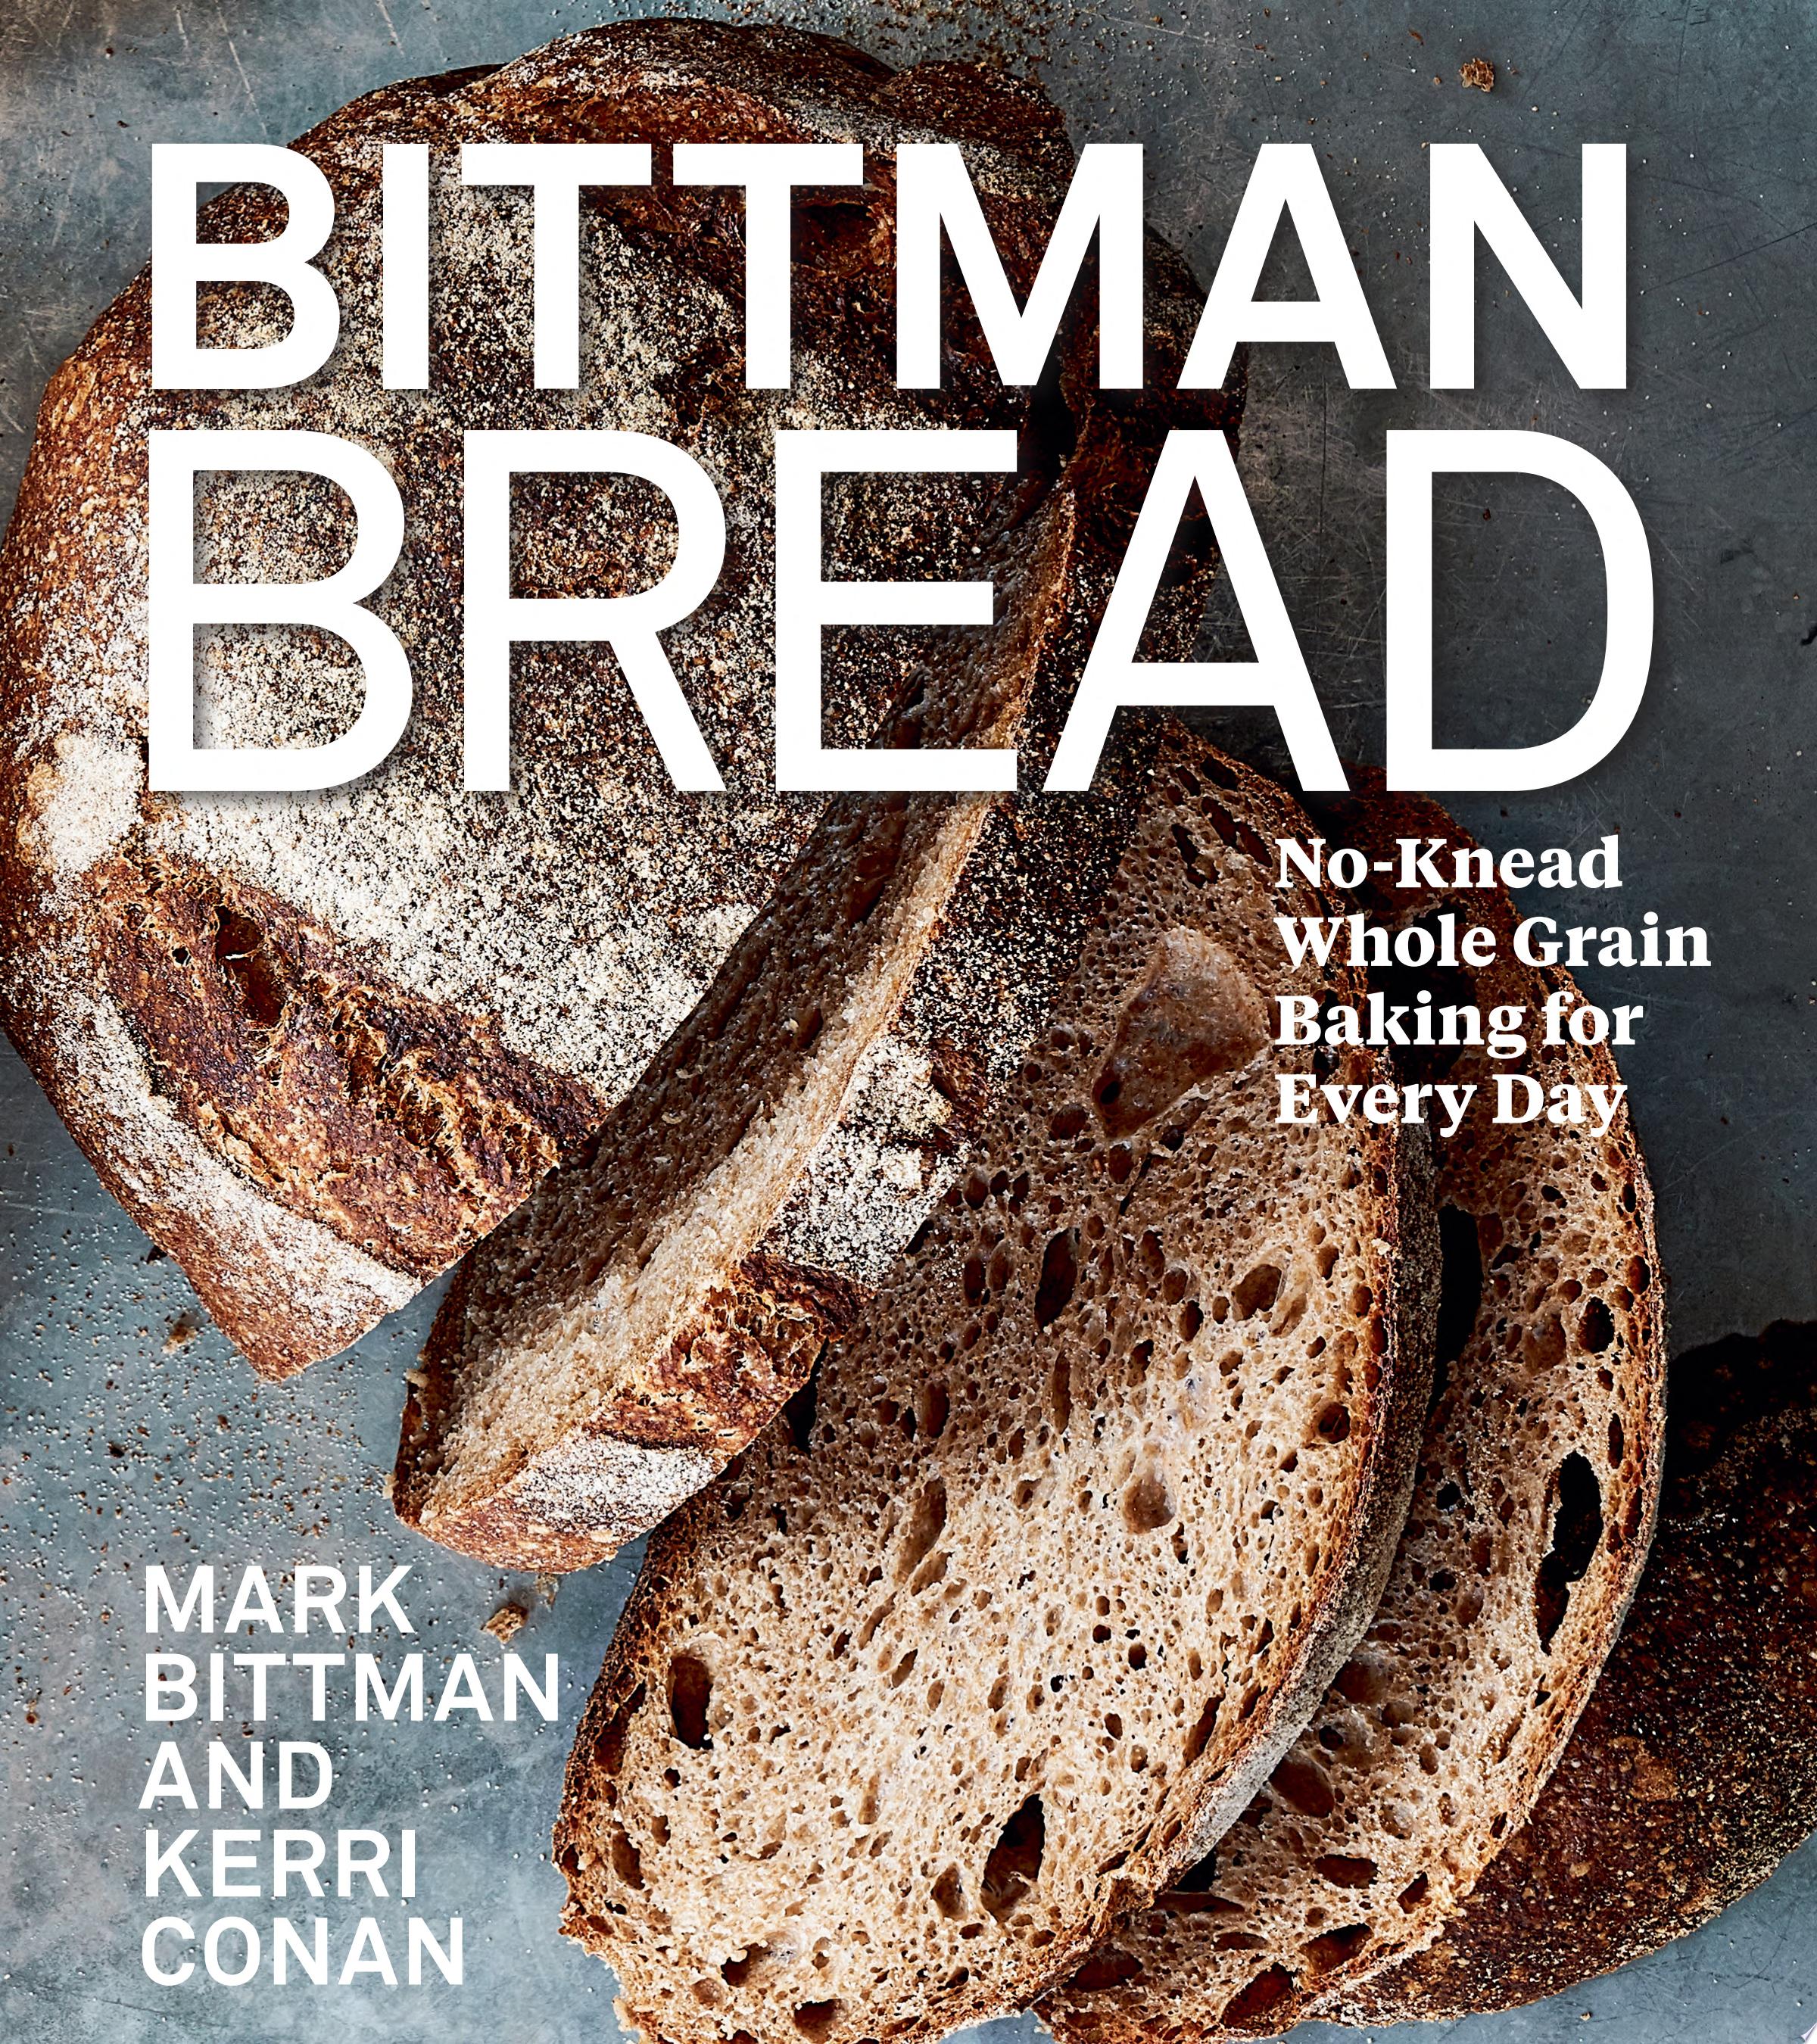 Image for "Bittman Bread"